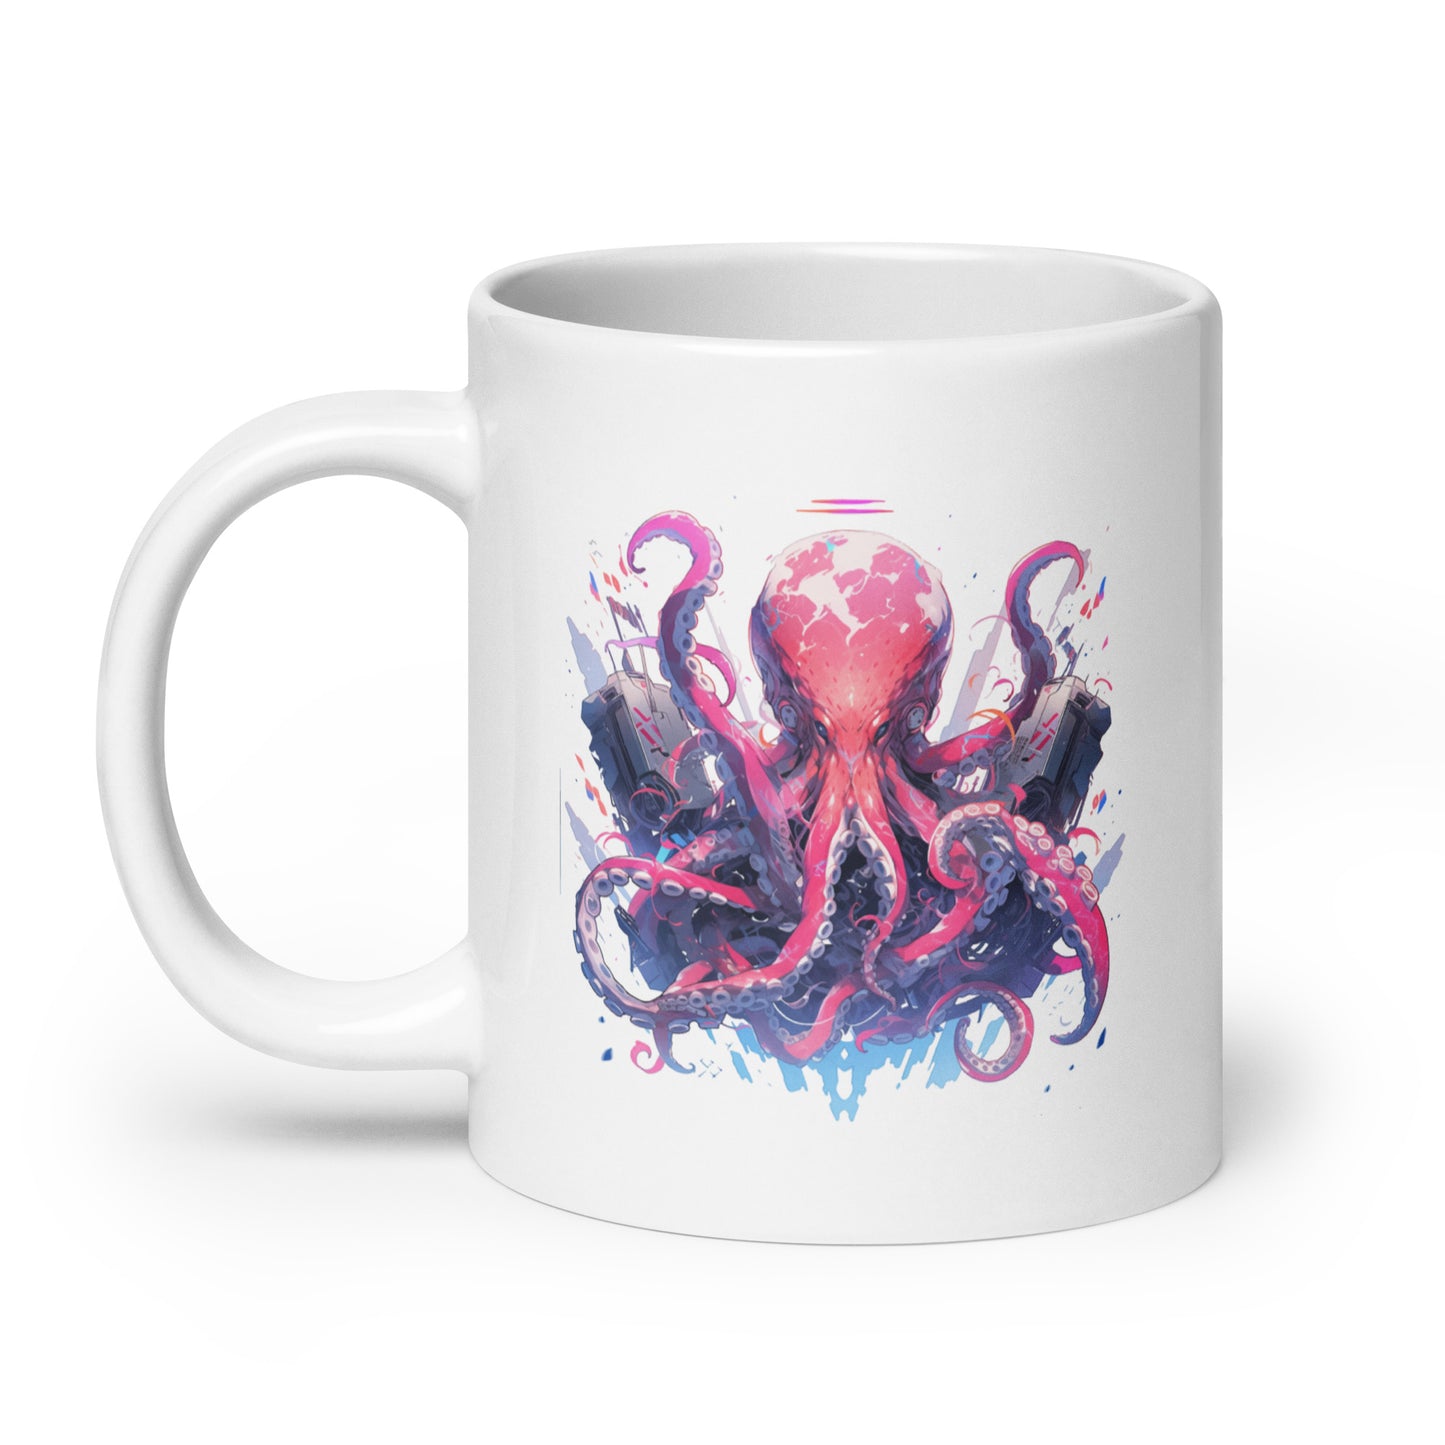 Animals fantastic, Cyber octopus mutant, Cyberpunk manga illustration, Magic biotechnology - White glossy mug